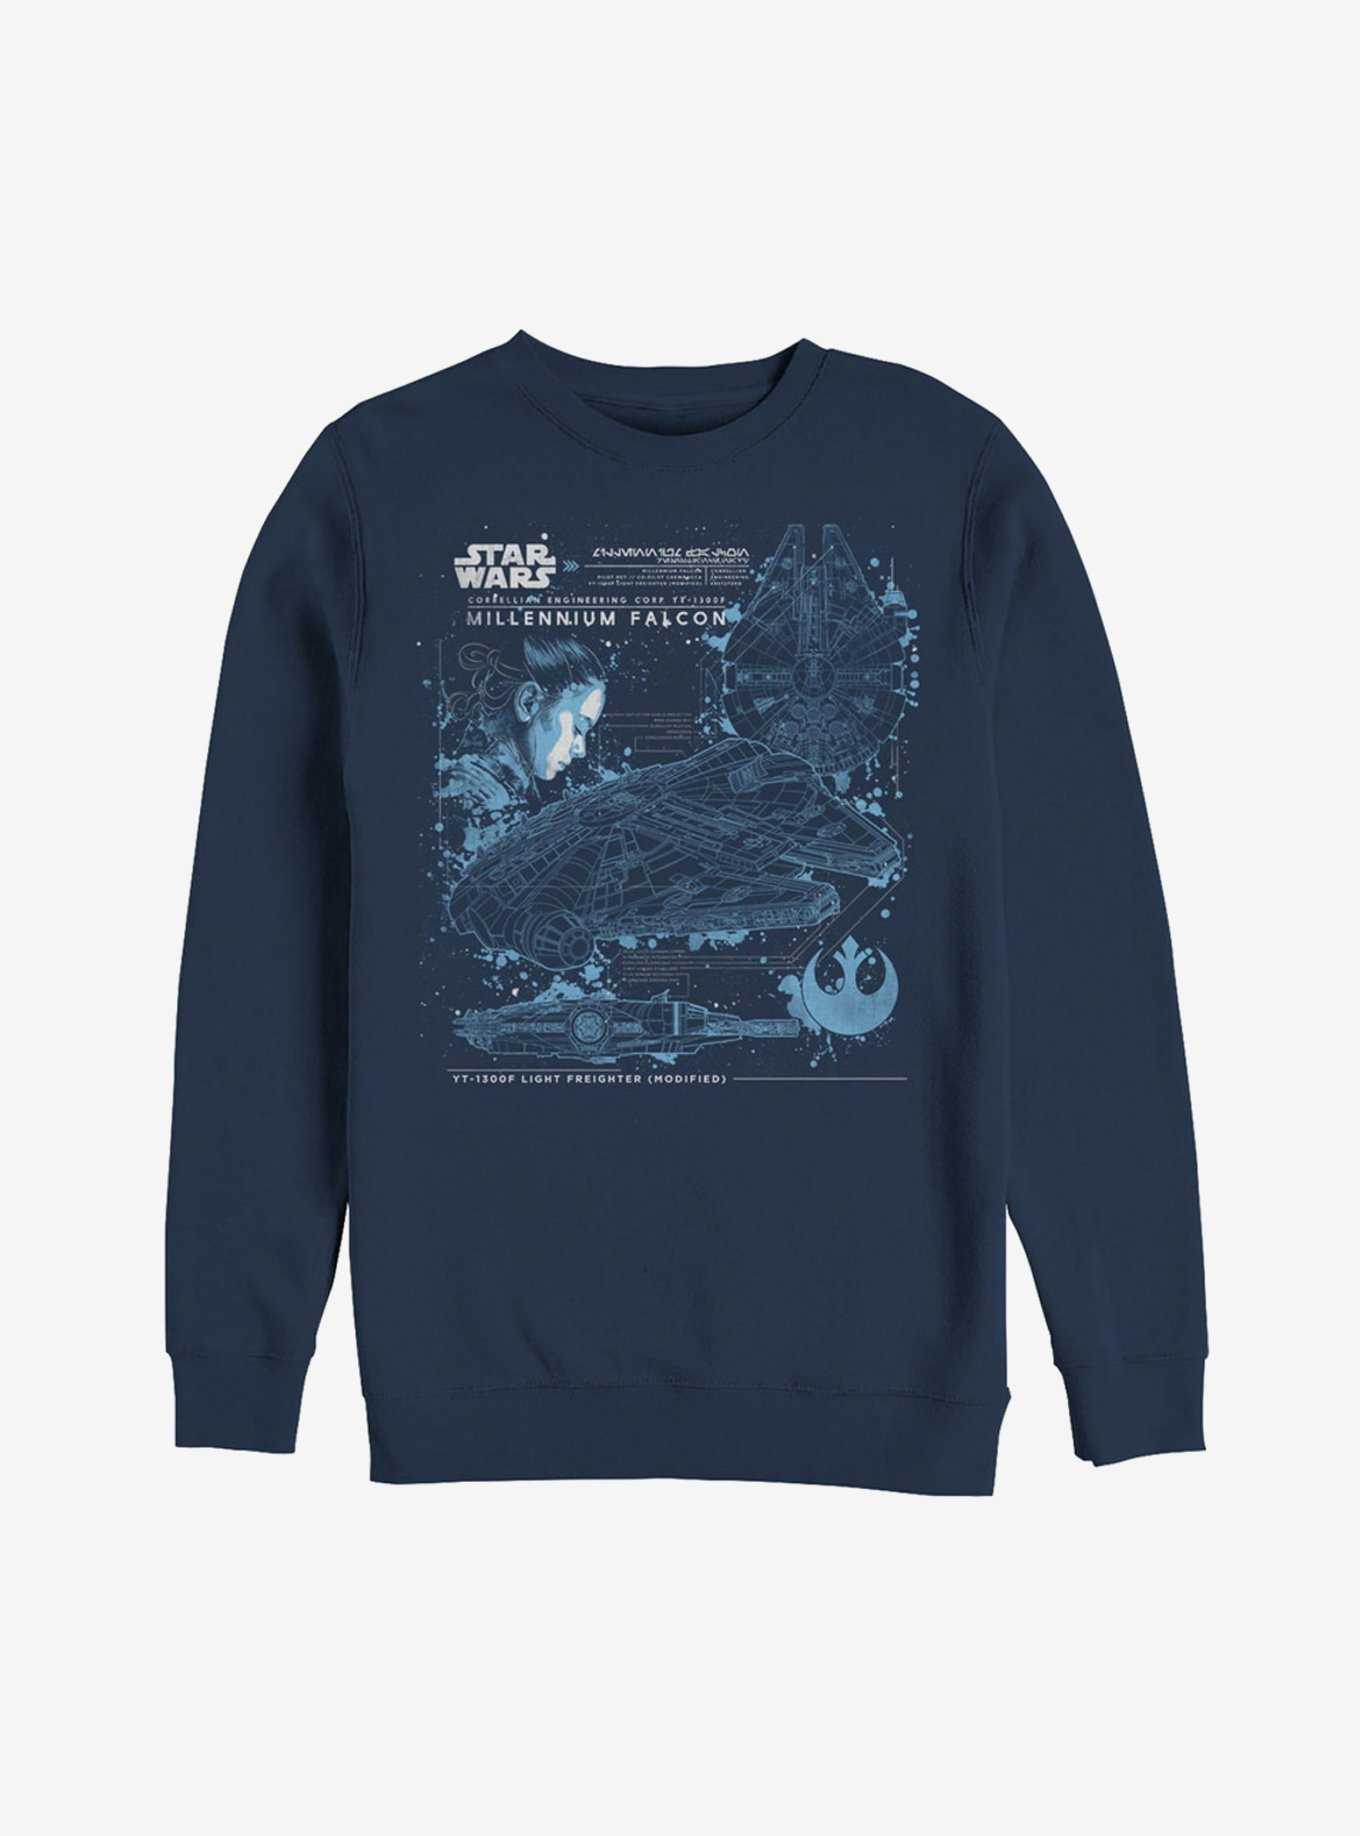 Star Wars Millennium Falcon Plans Sweatshirt, , hi-res